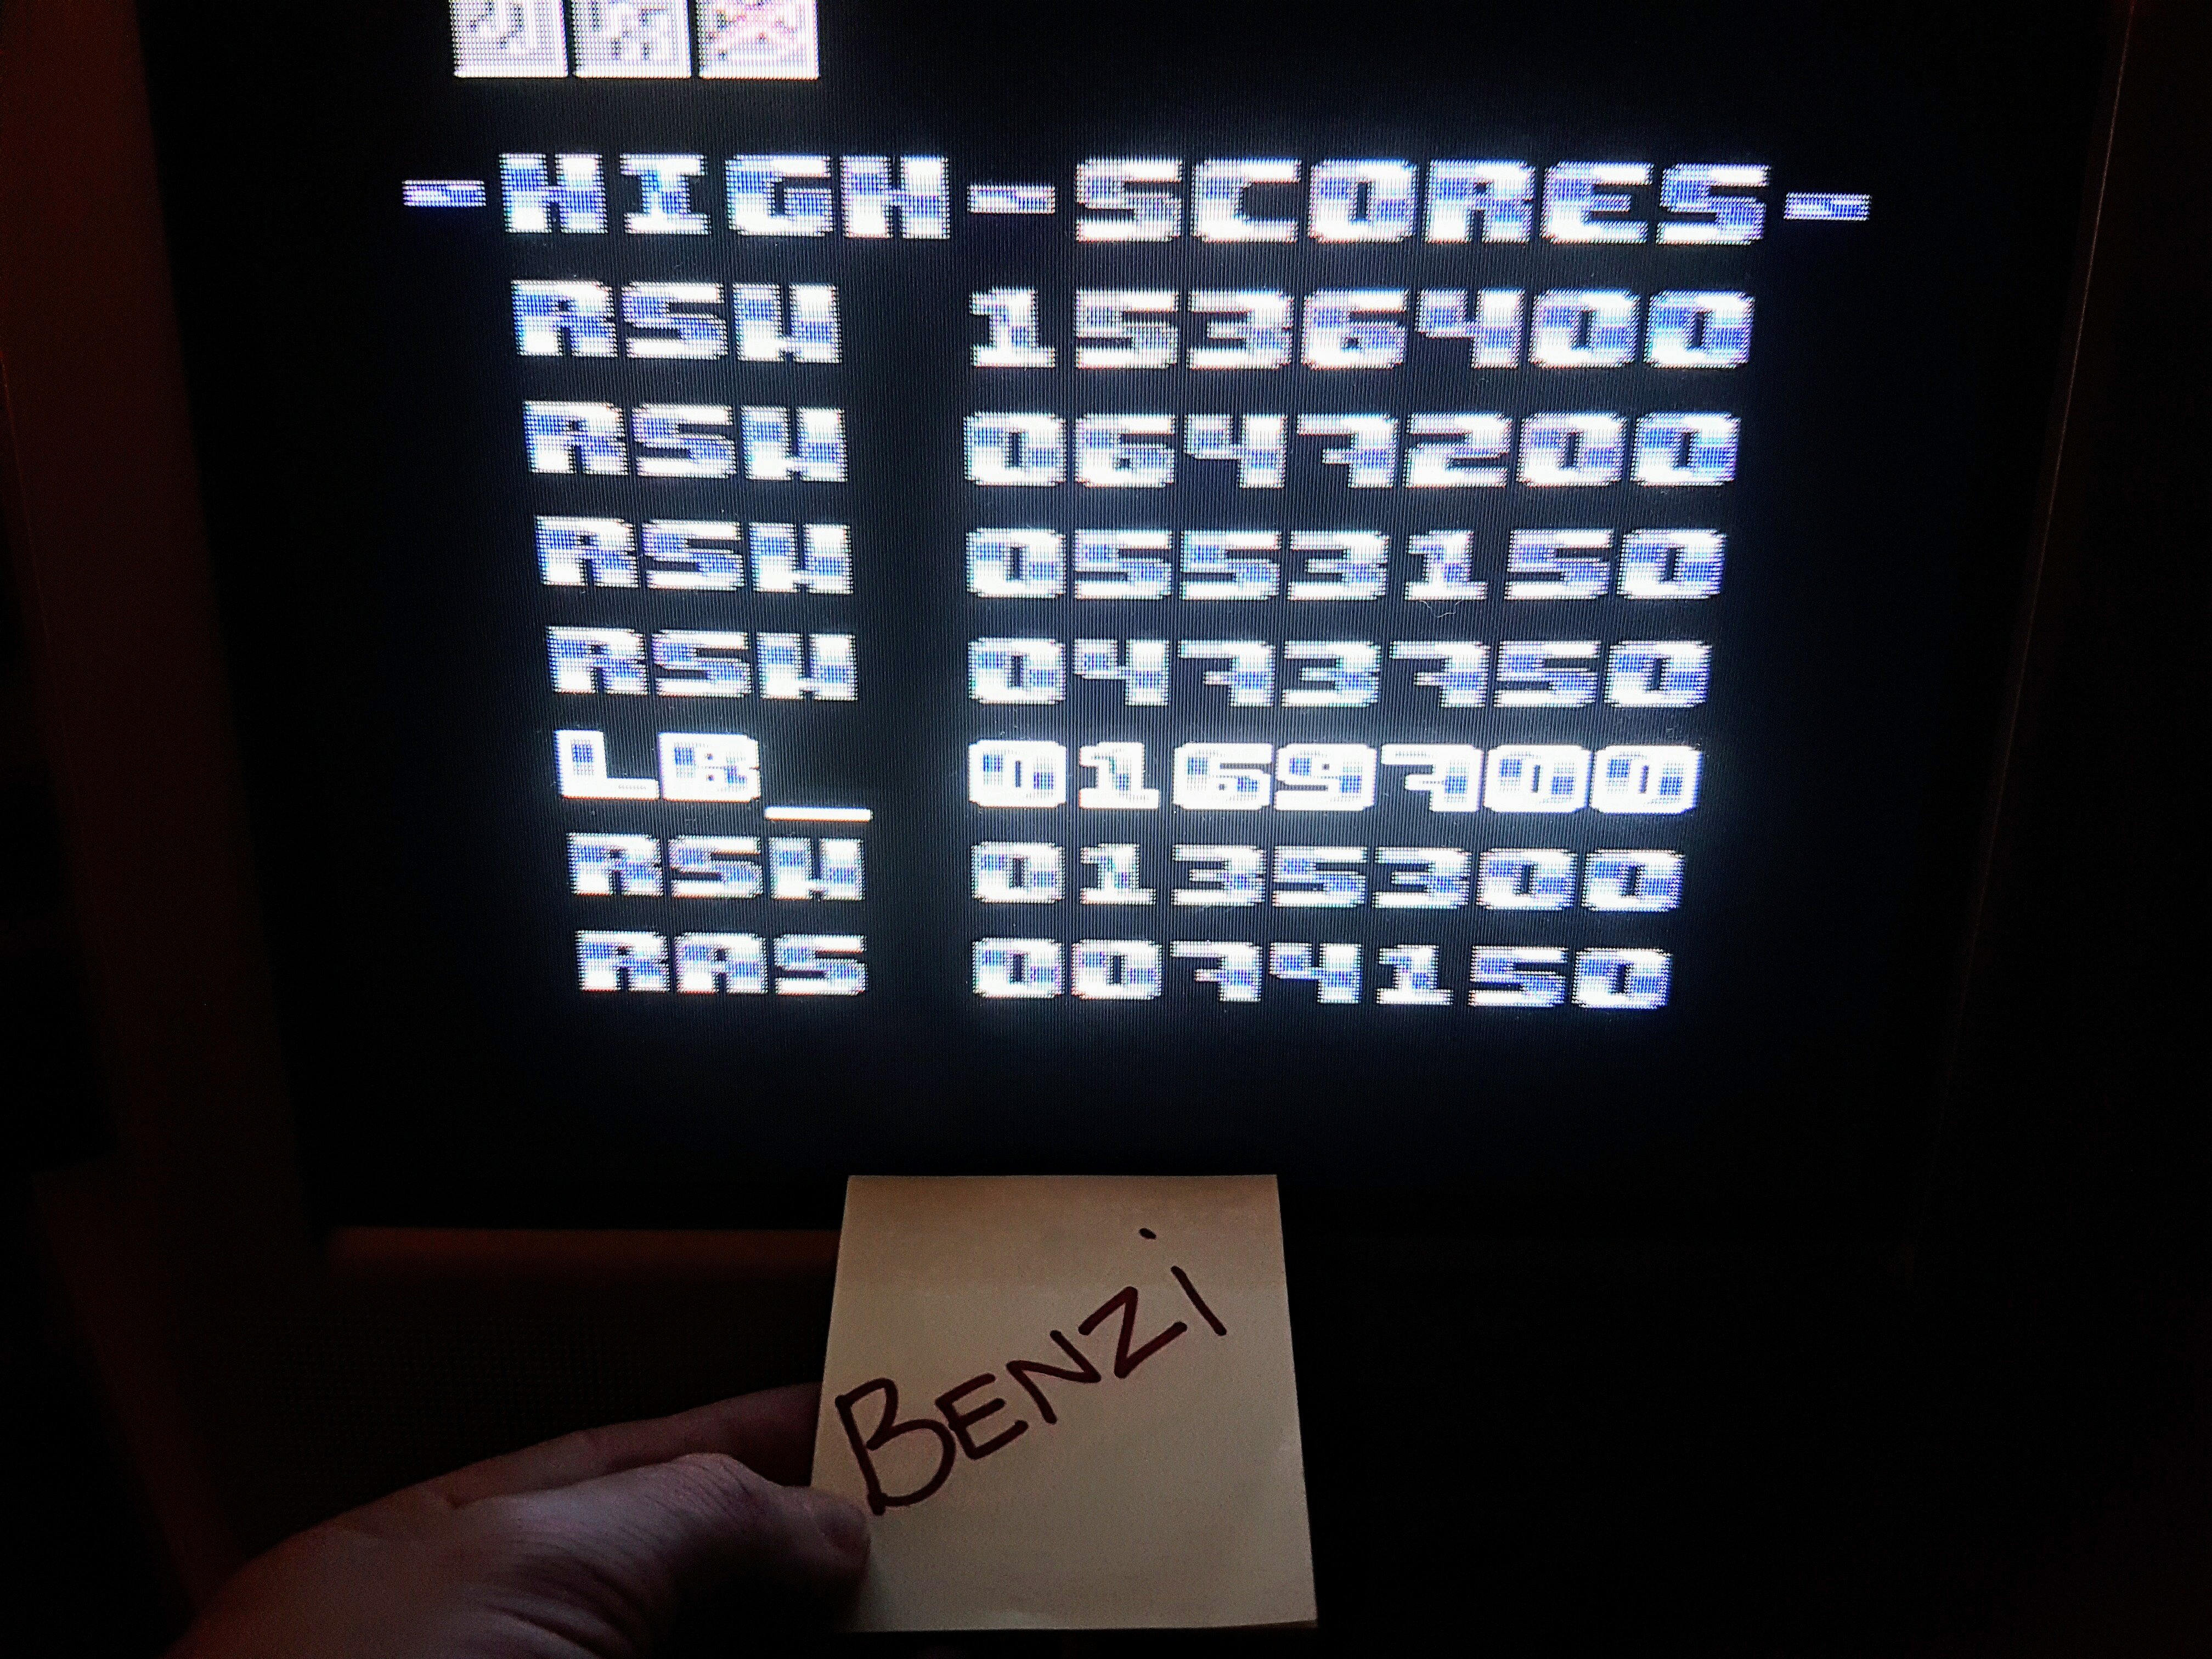 Benzi: Hawkeye (Commodore 64) 169,700 points on 2017-01-15 15:16:13